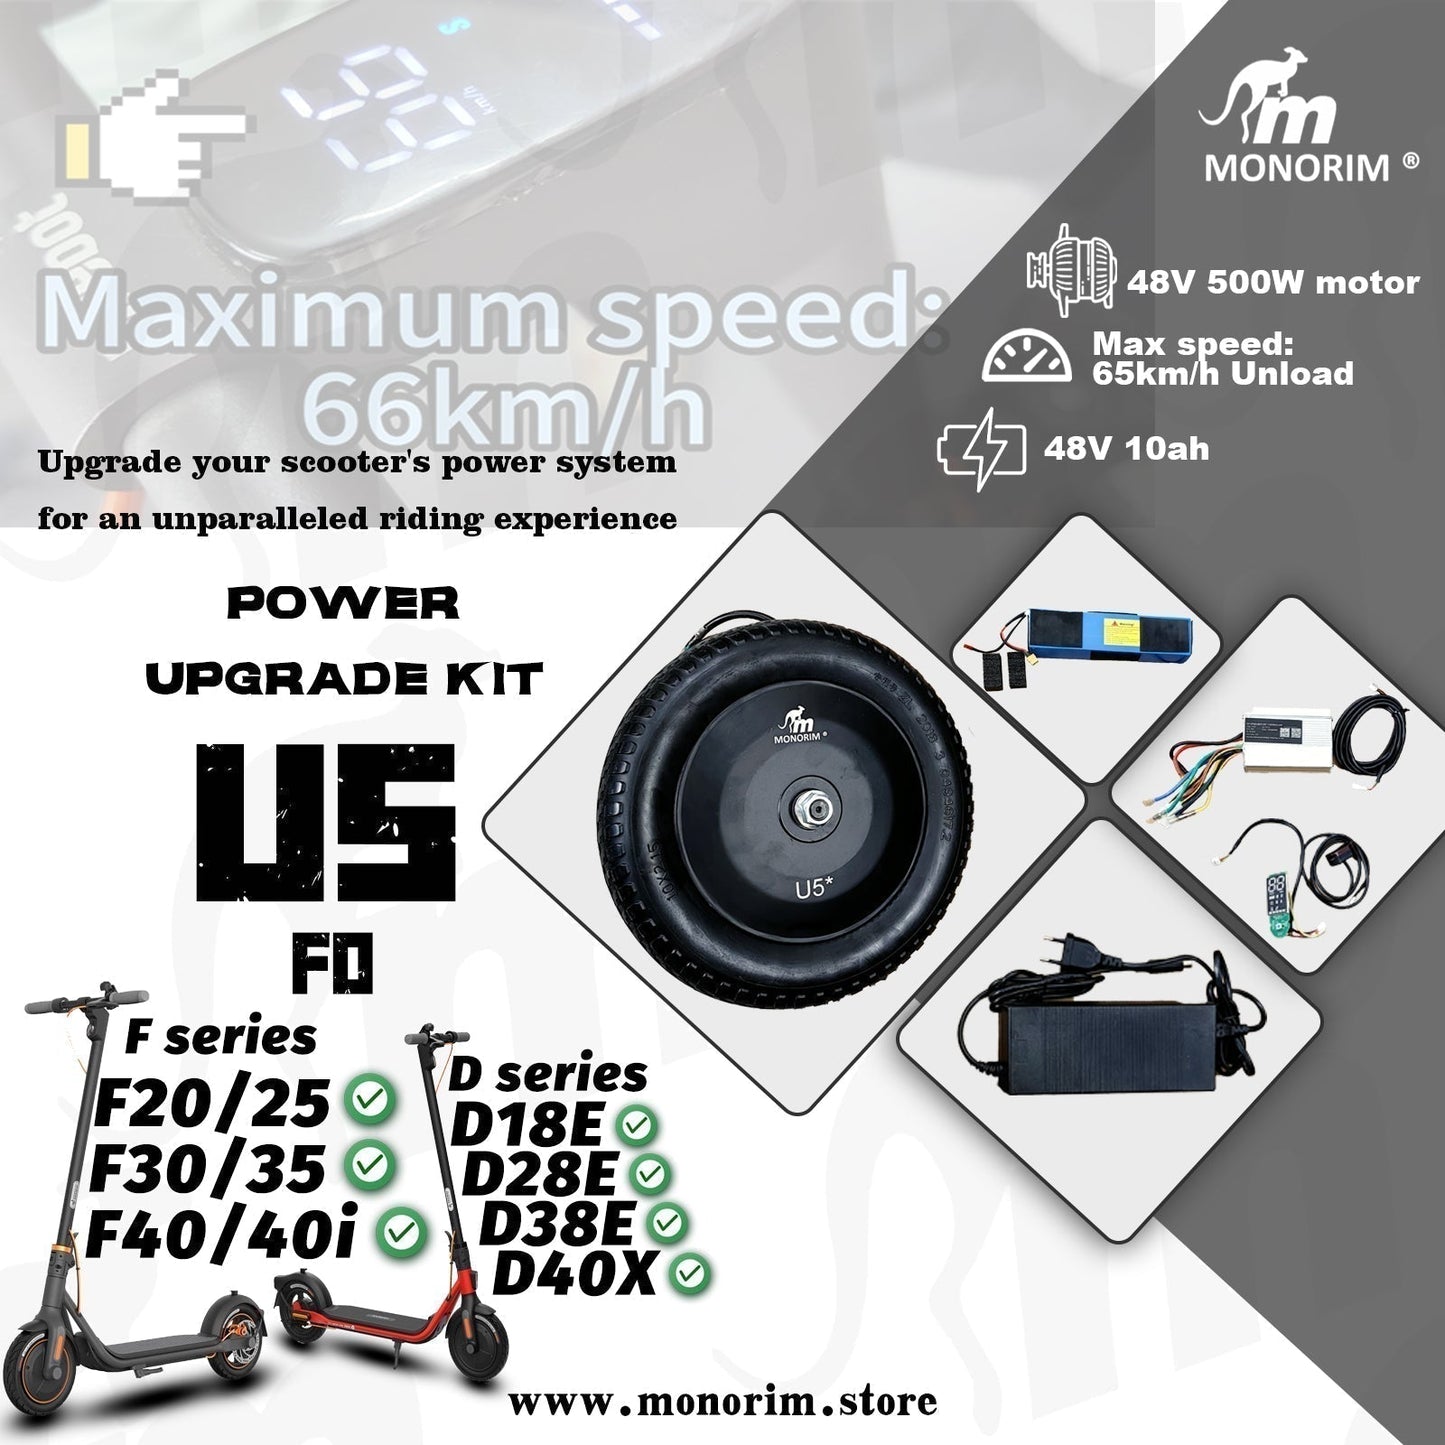 Monorim U5-F0 Upgrade Kit to be 500w 48v 10.4ah for segway D28E Speed 65km/h